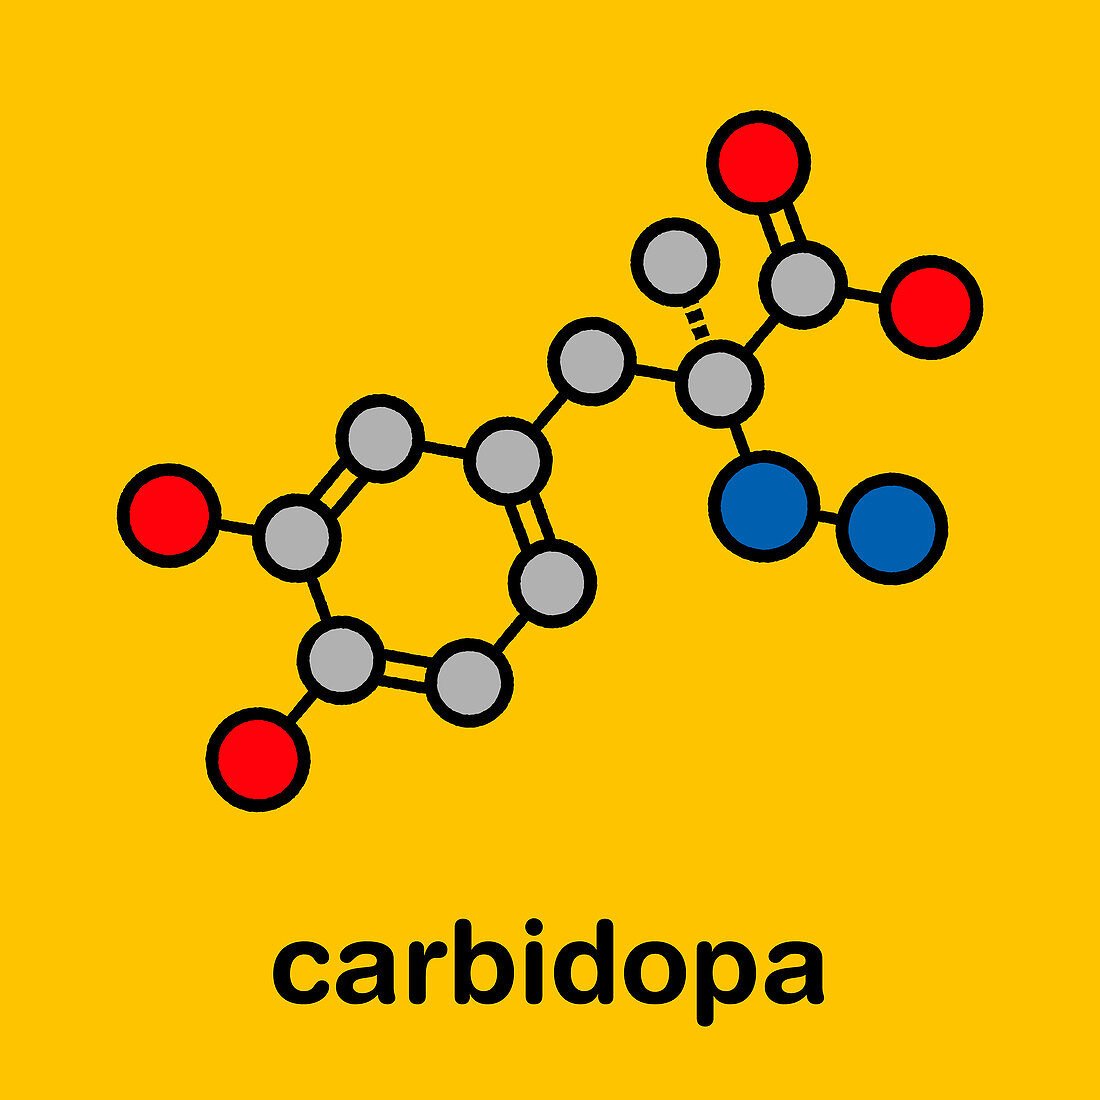 Carbidopa Parkinson's disease drug, molecular model